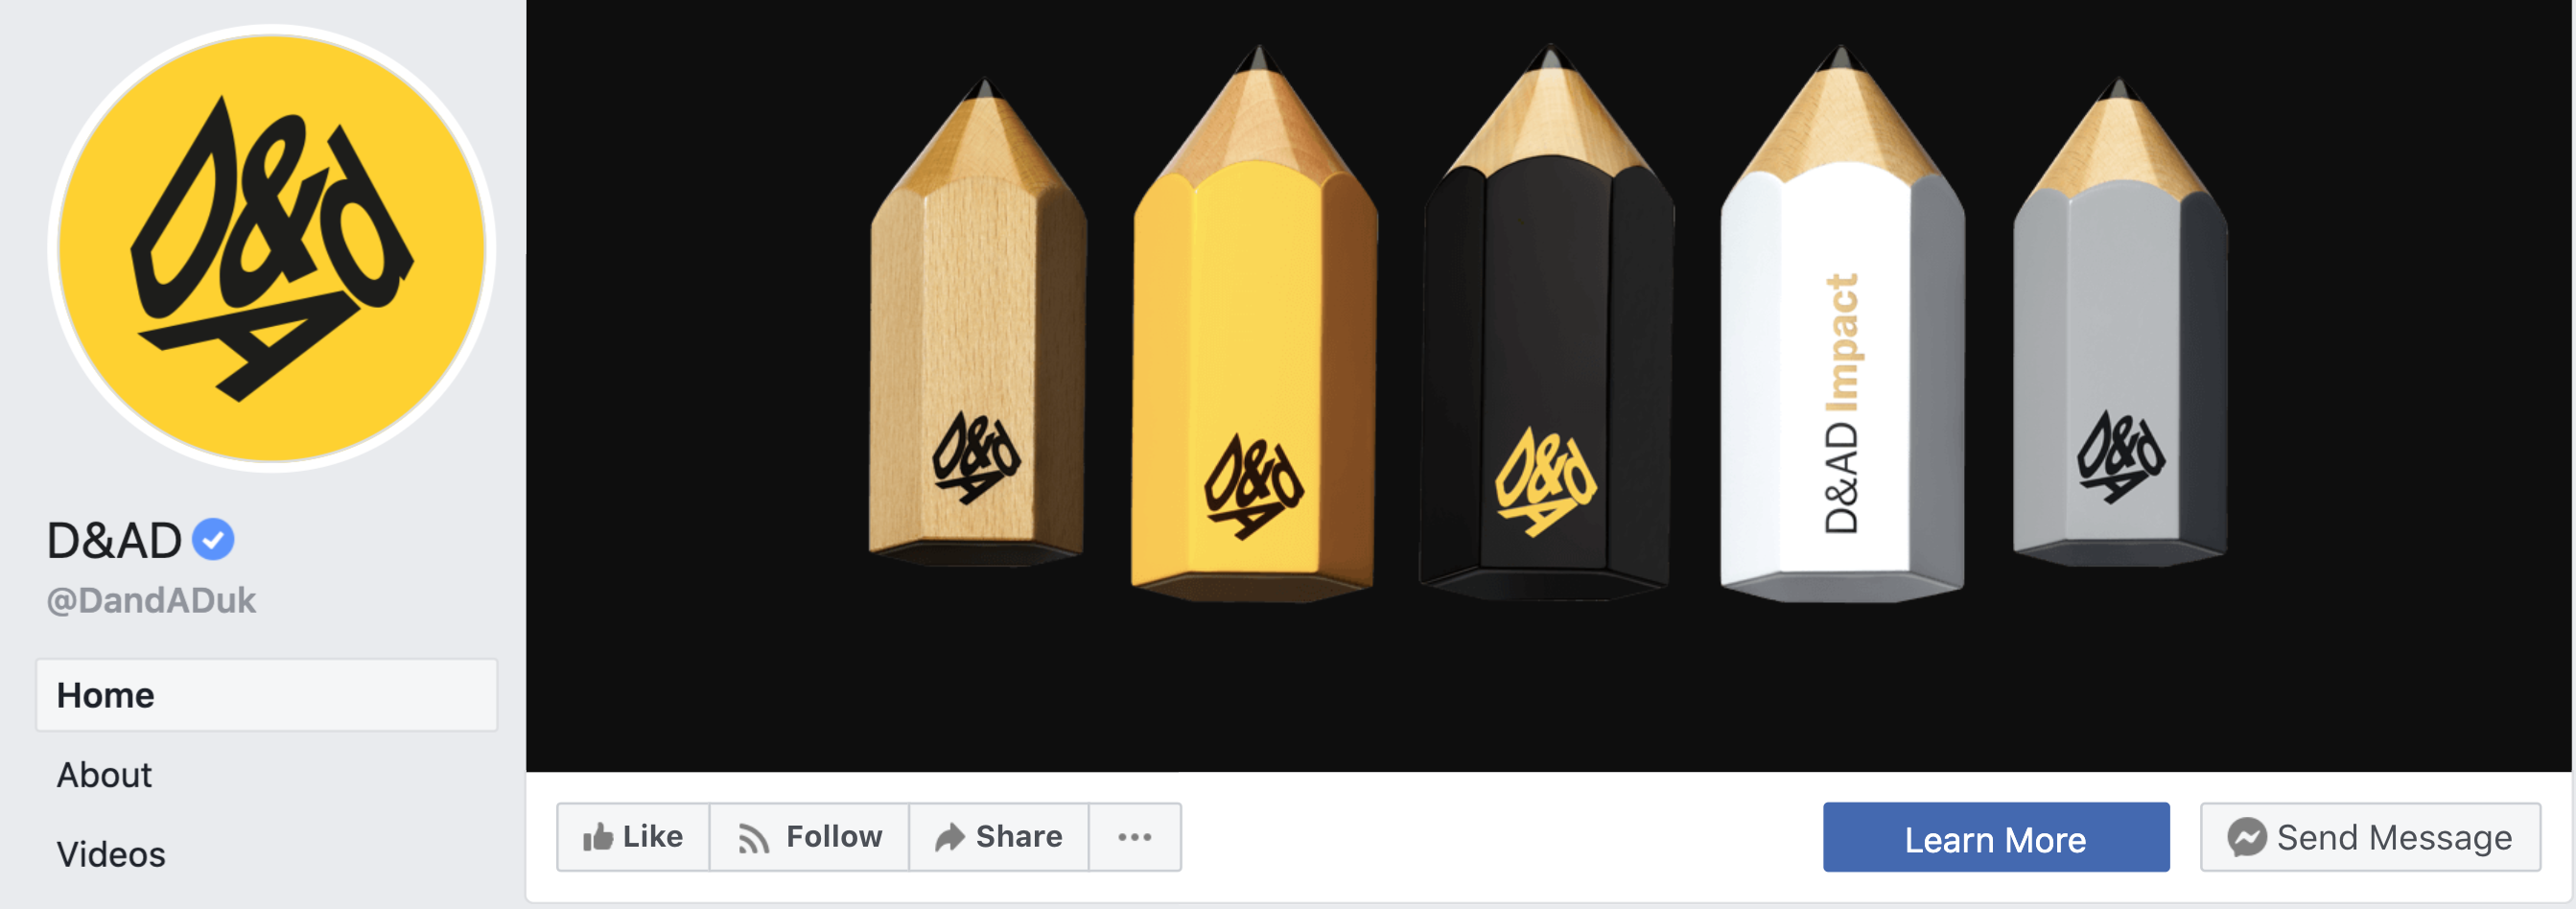 D&AD facebook banner